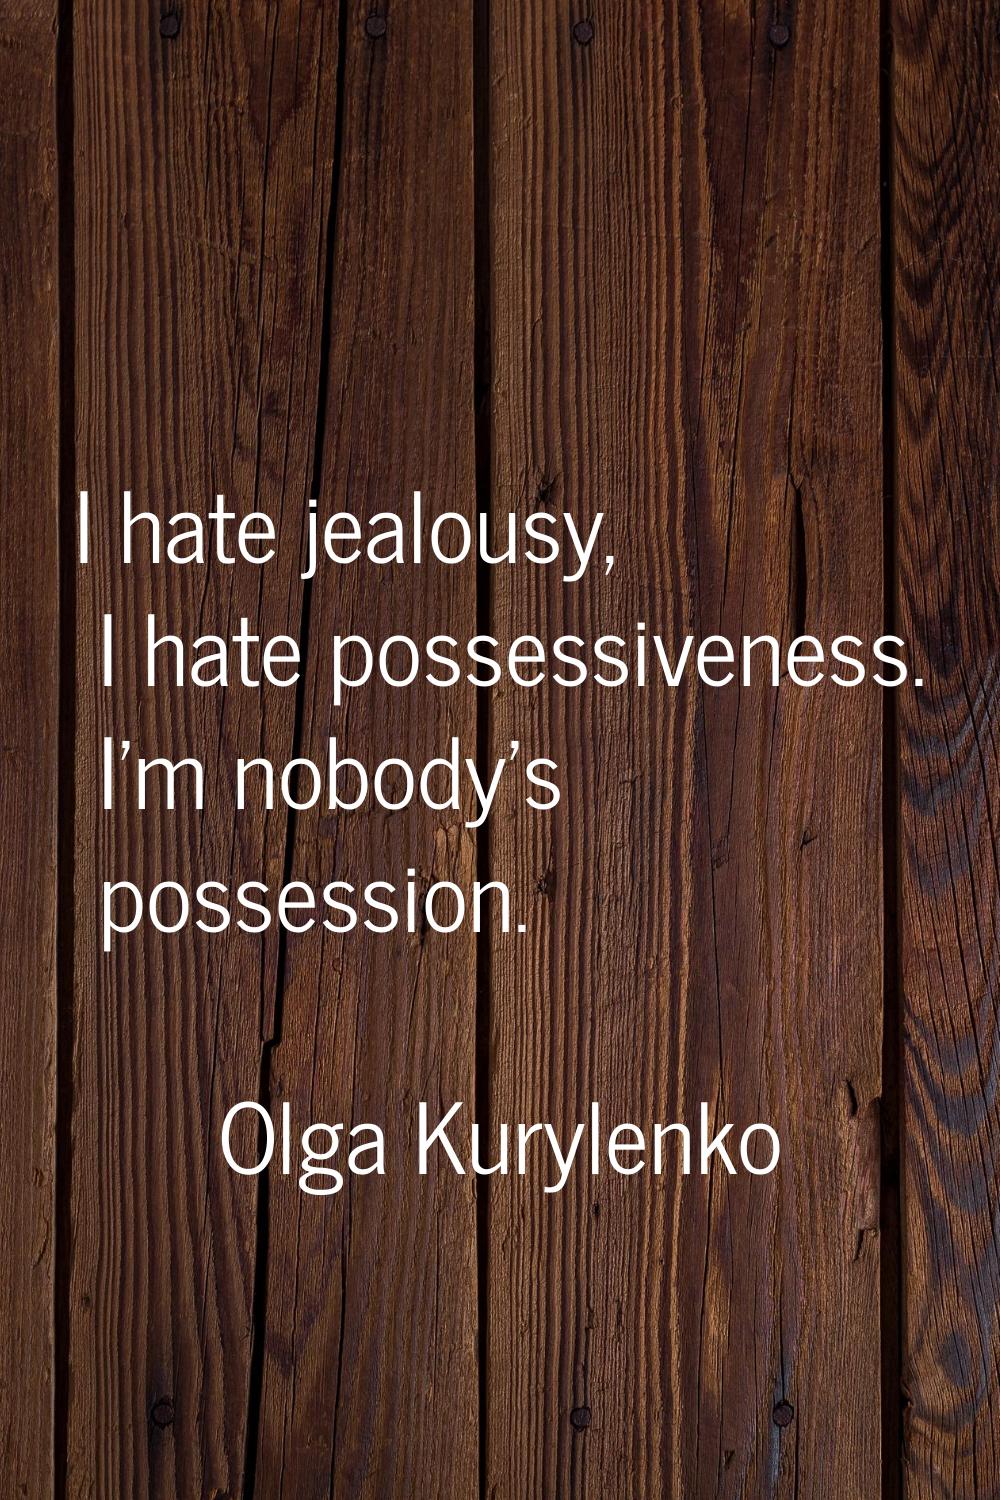 I hate jealousy, I hate possessiveness. I'm nobody's possession.